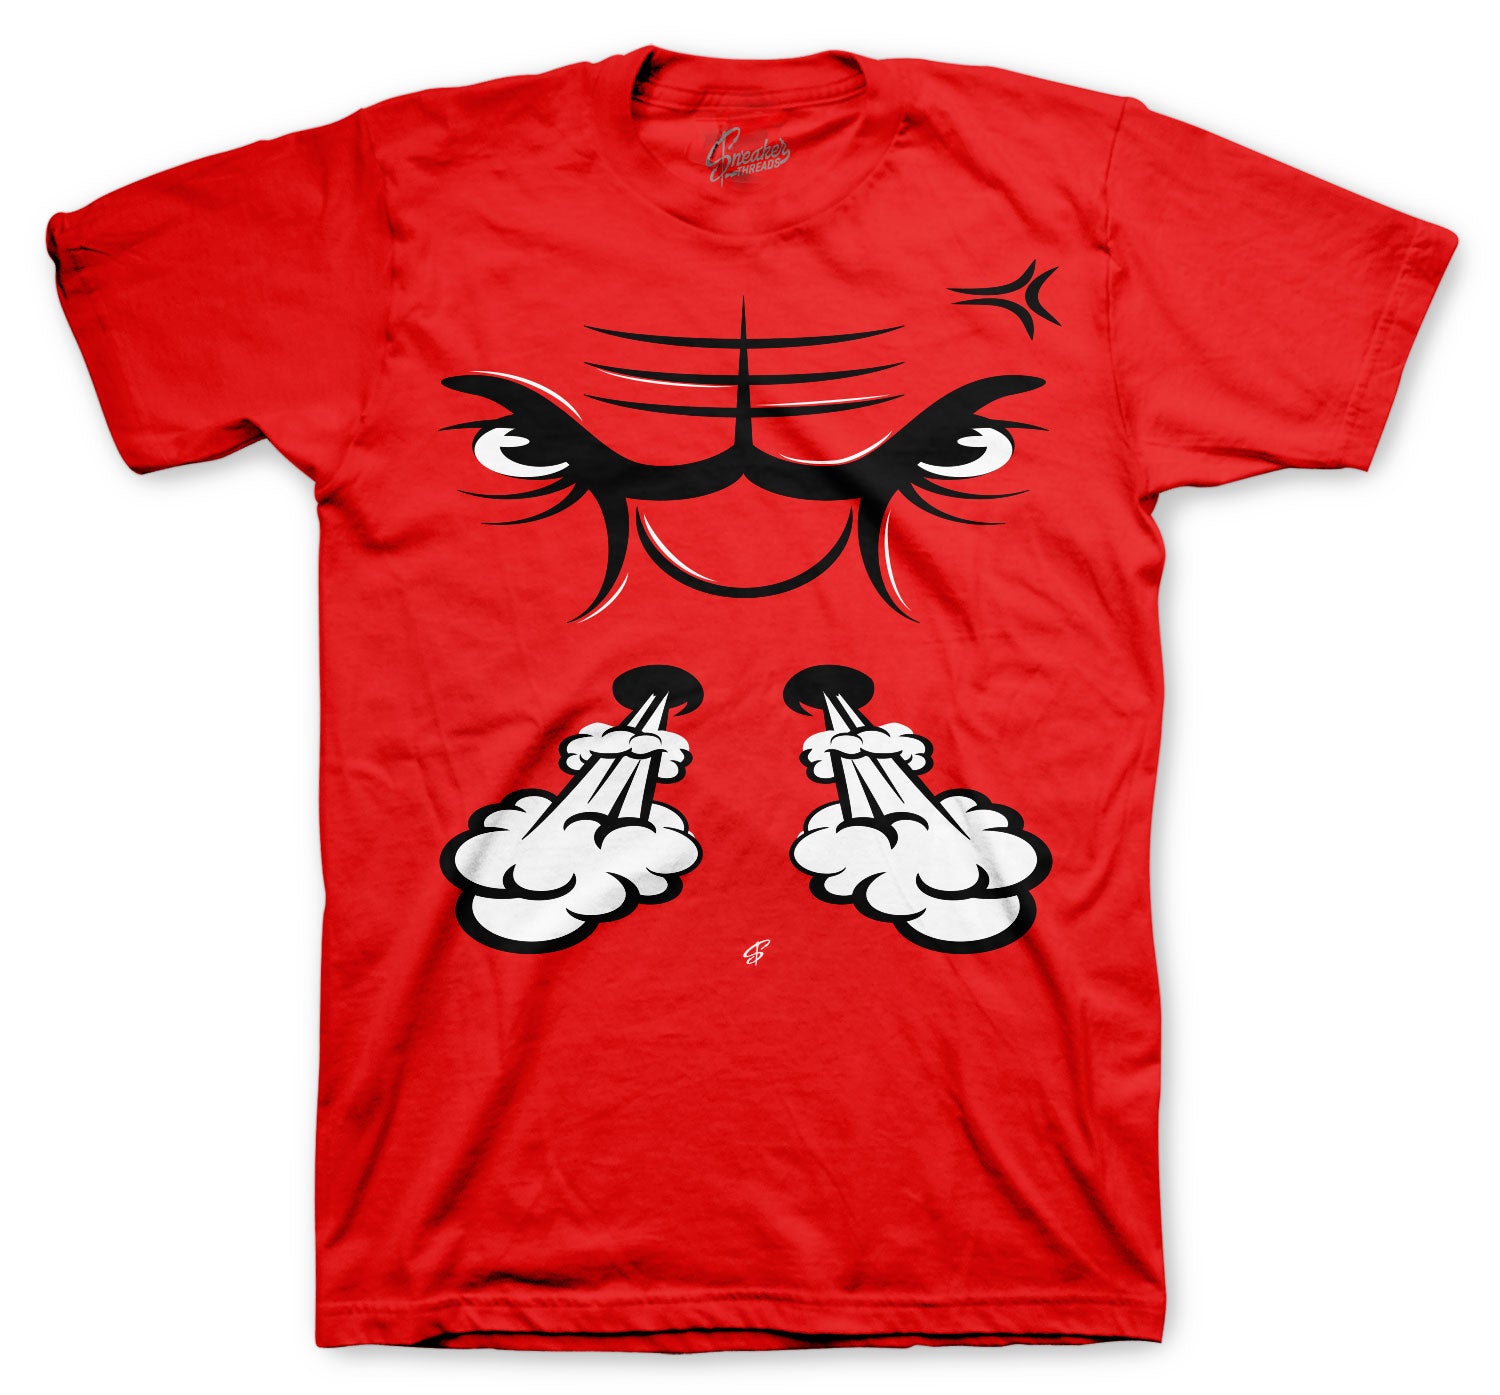 Retro 1 AJKO Chicago Shirt - Raging Face - Red